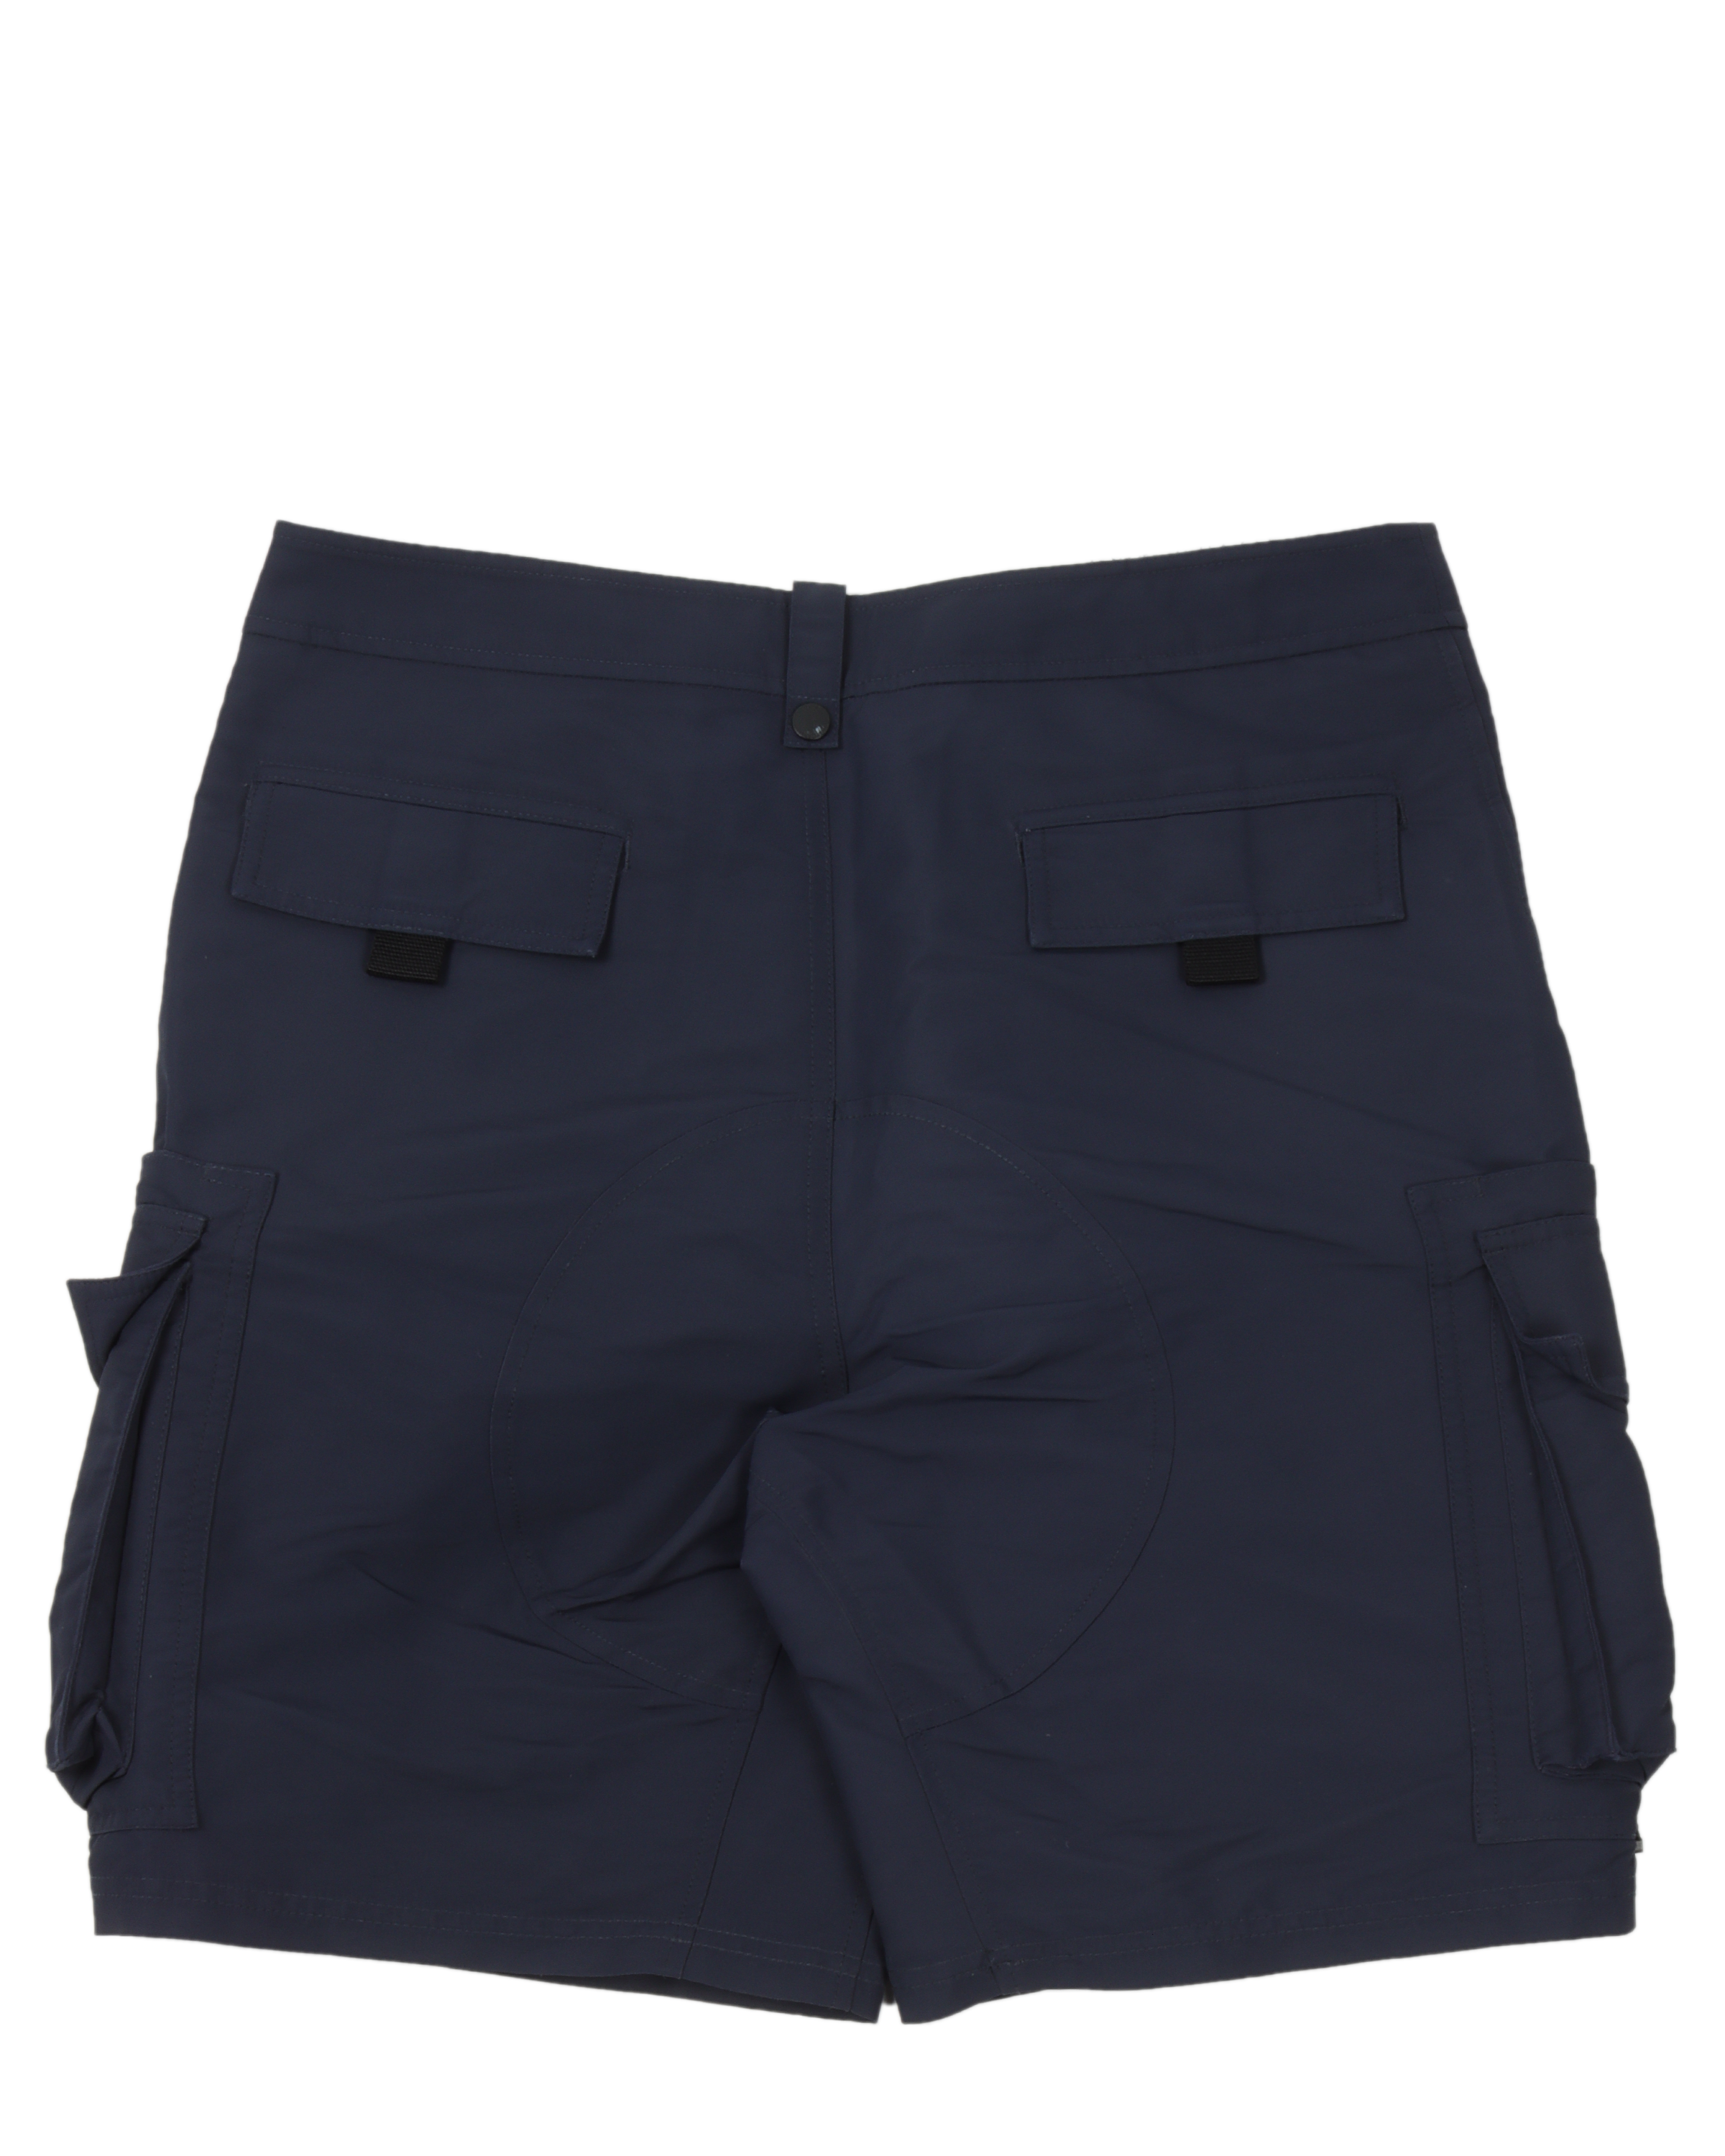 Alyx Buckle Cargo Shorts